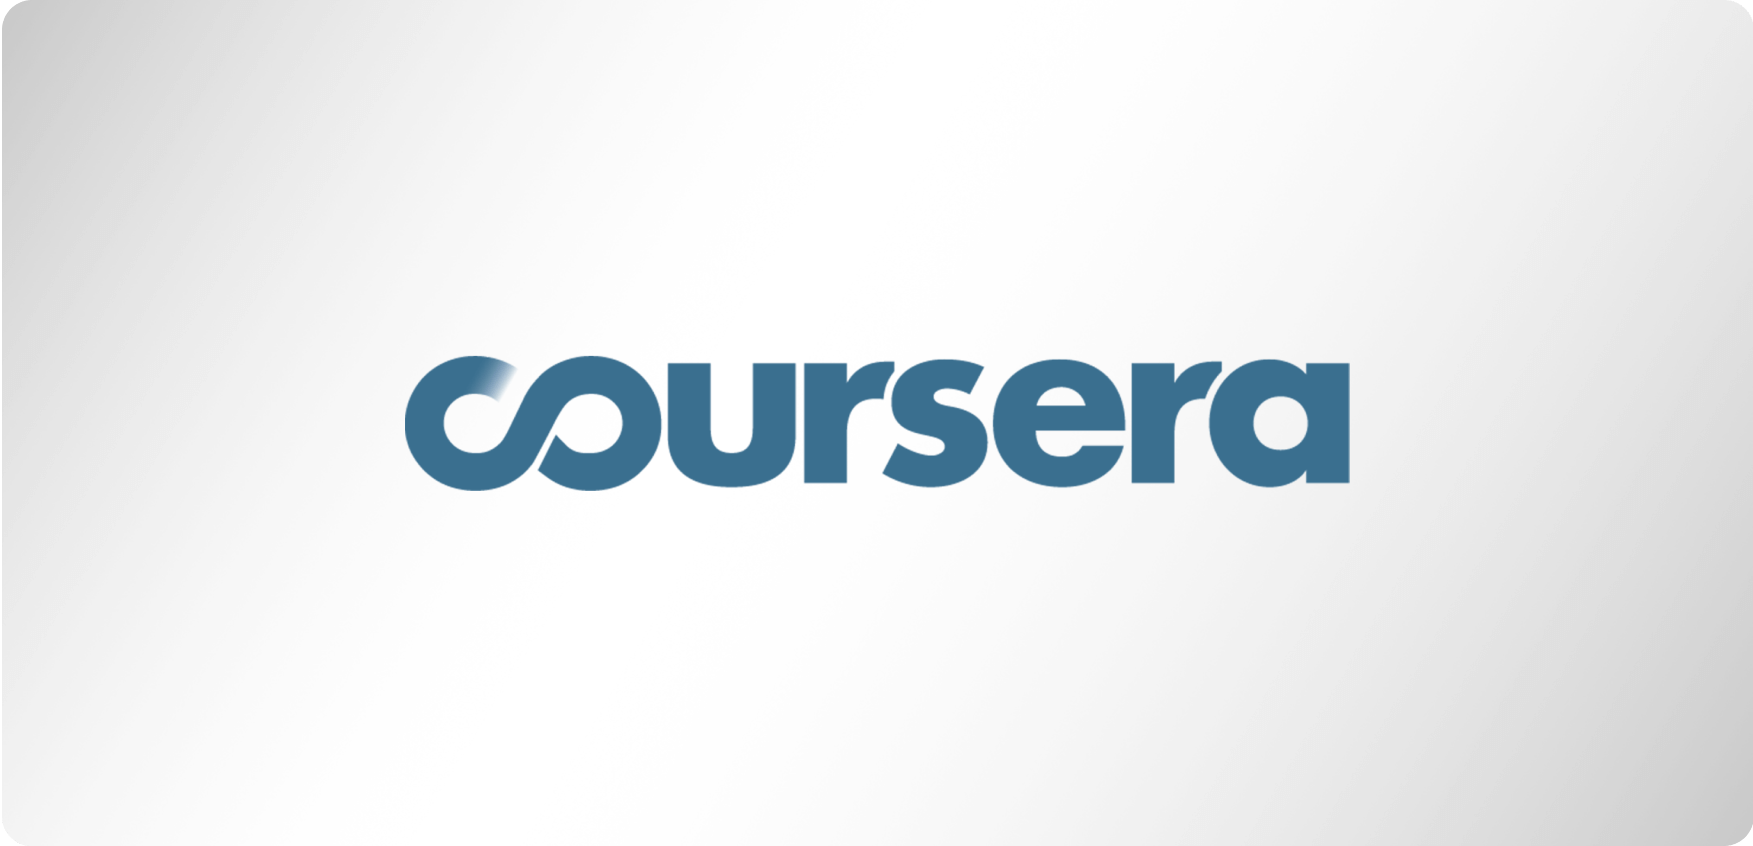 Coursera branding logo design shown on a gray background